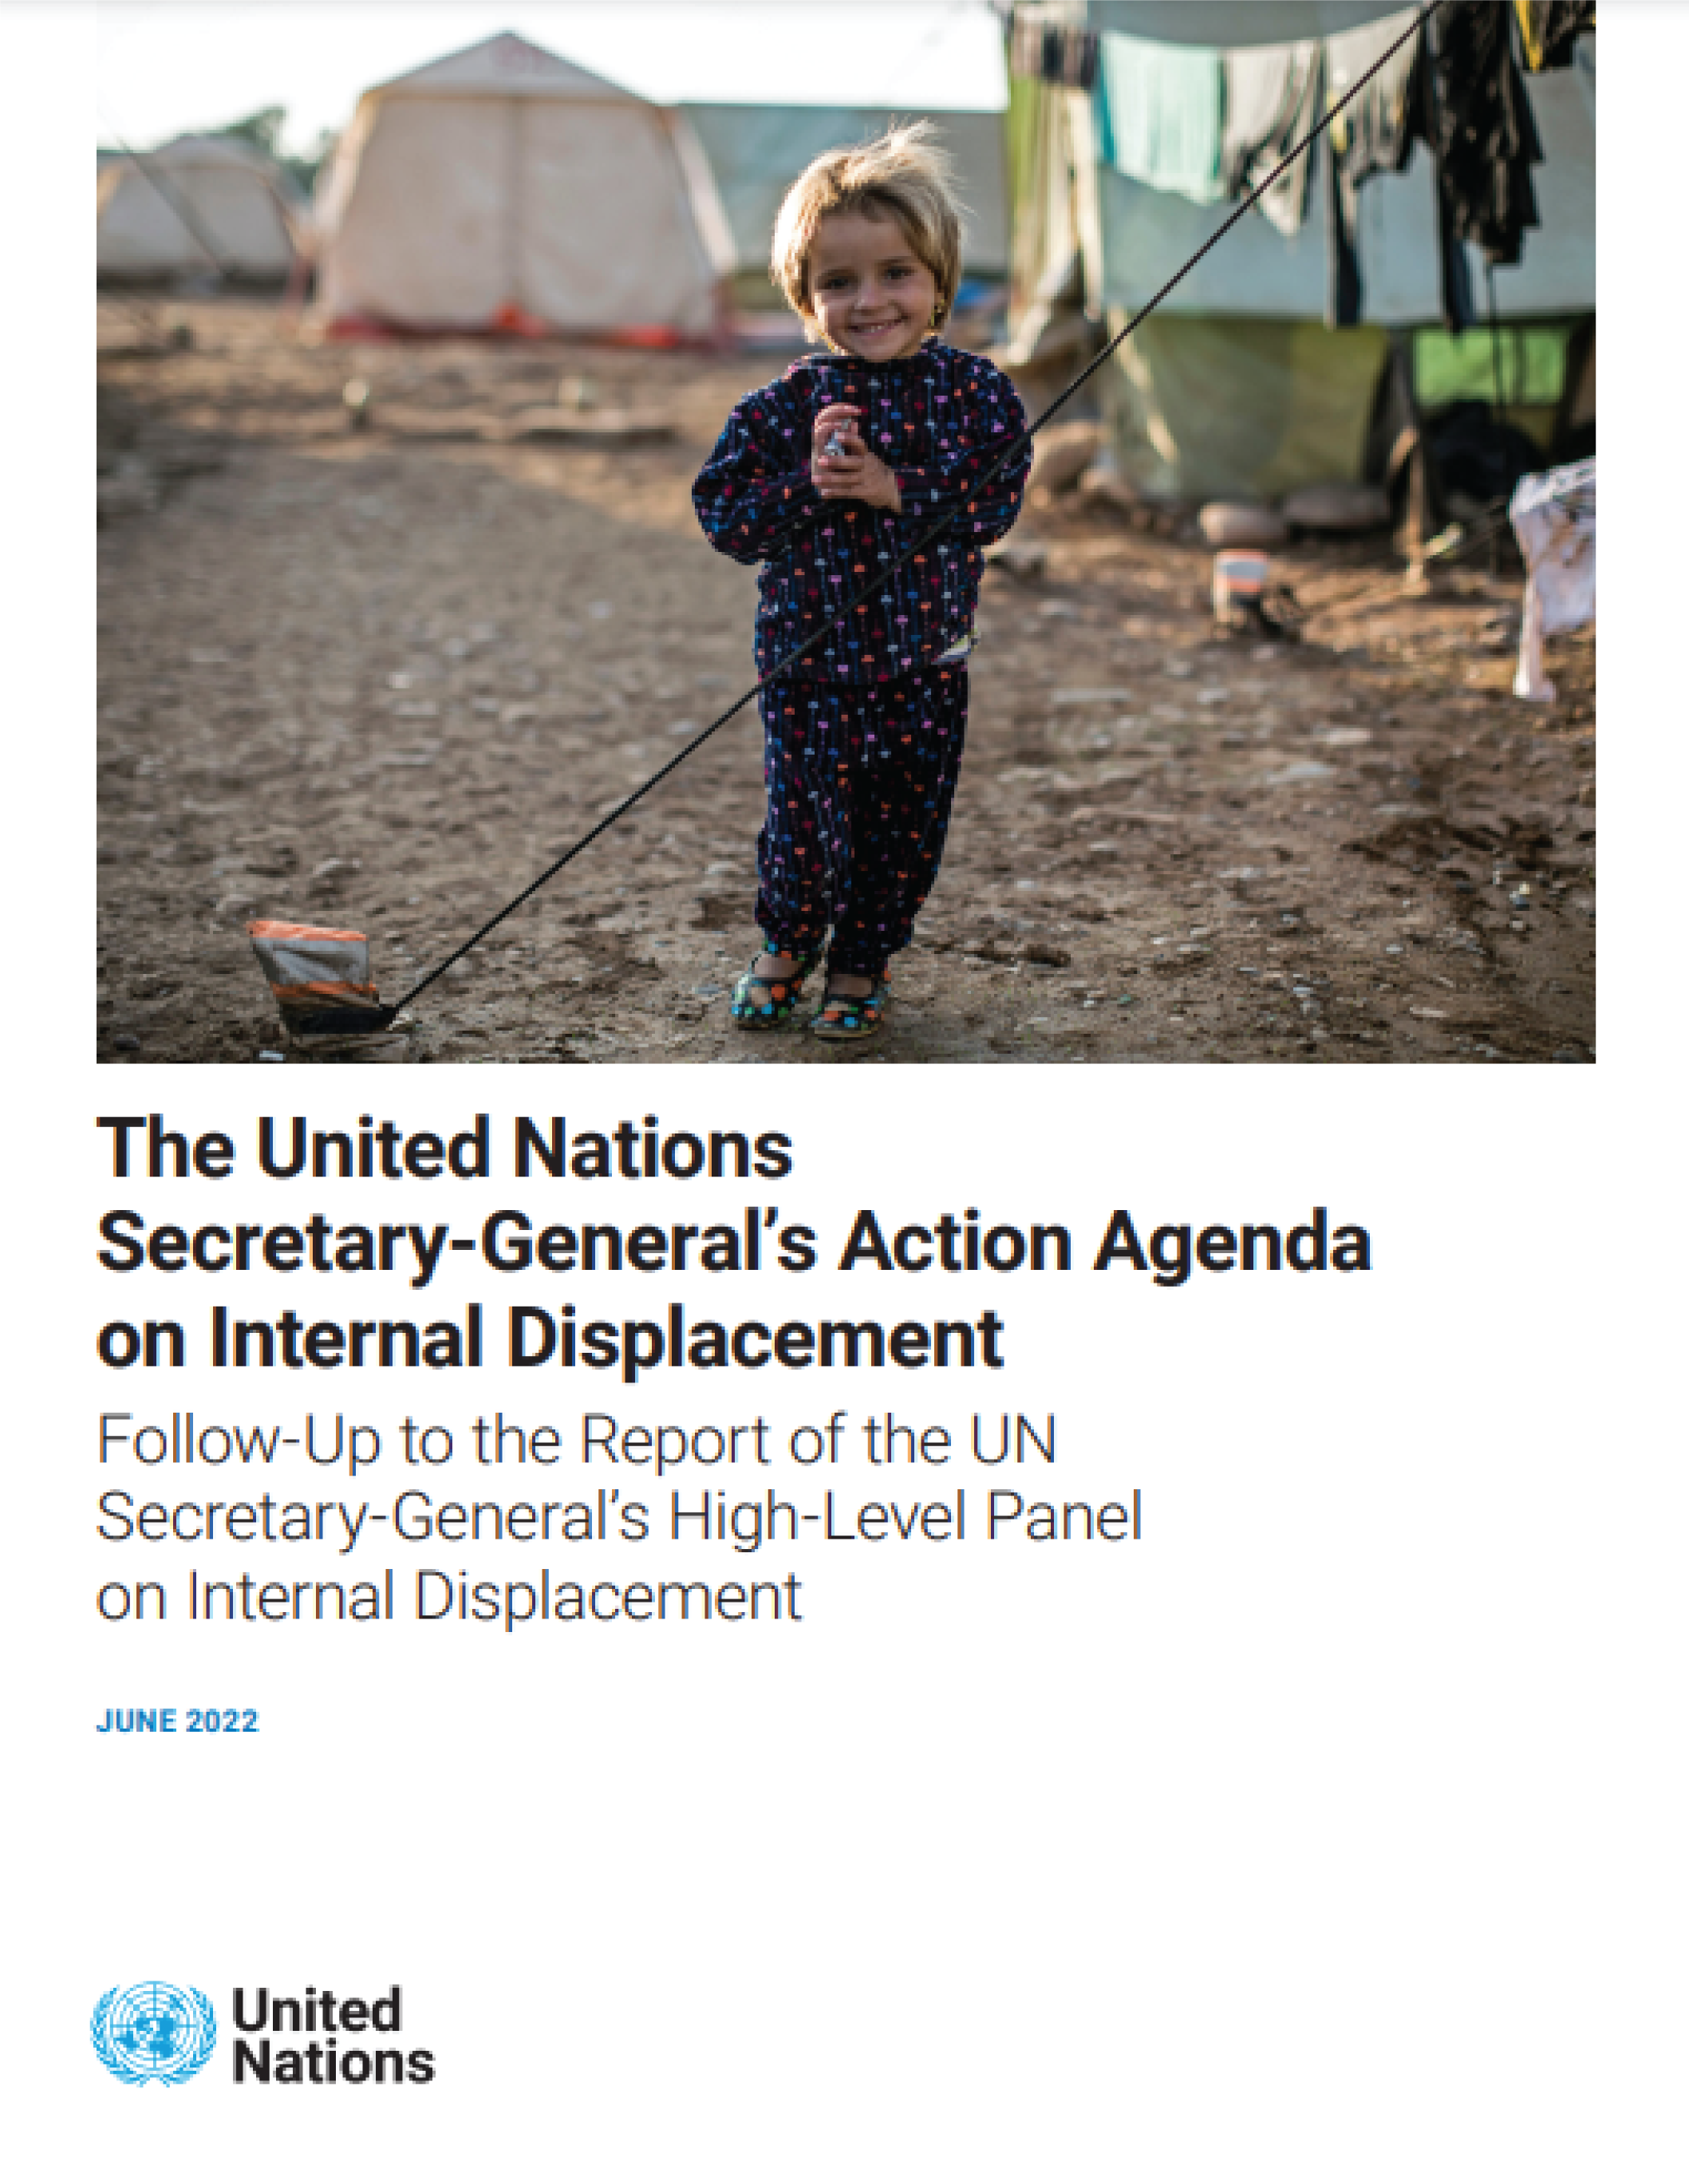 Secretary-General’s Action Agenda on Internal Displacement